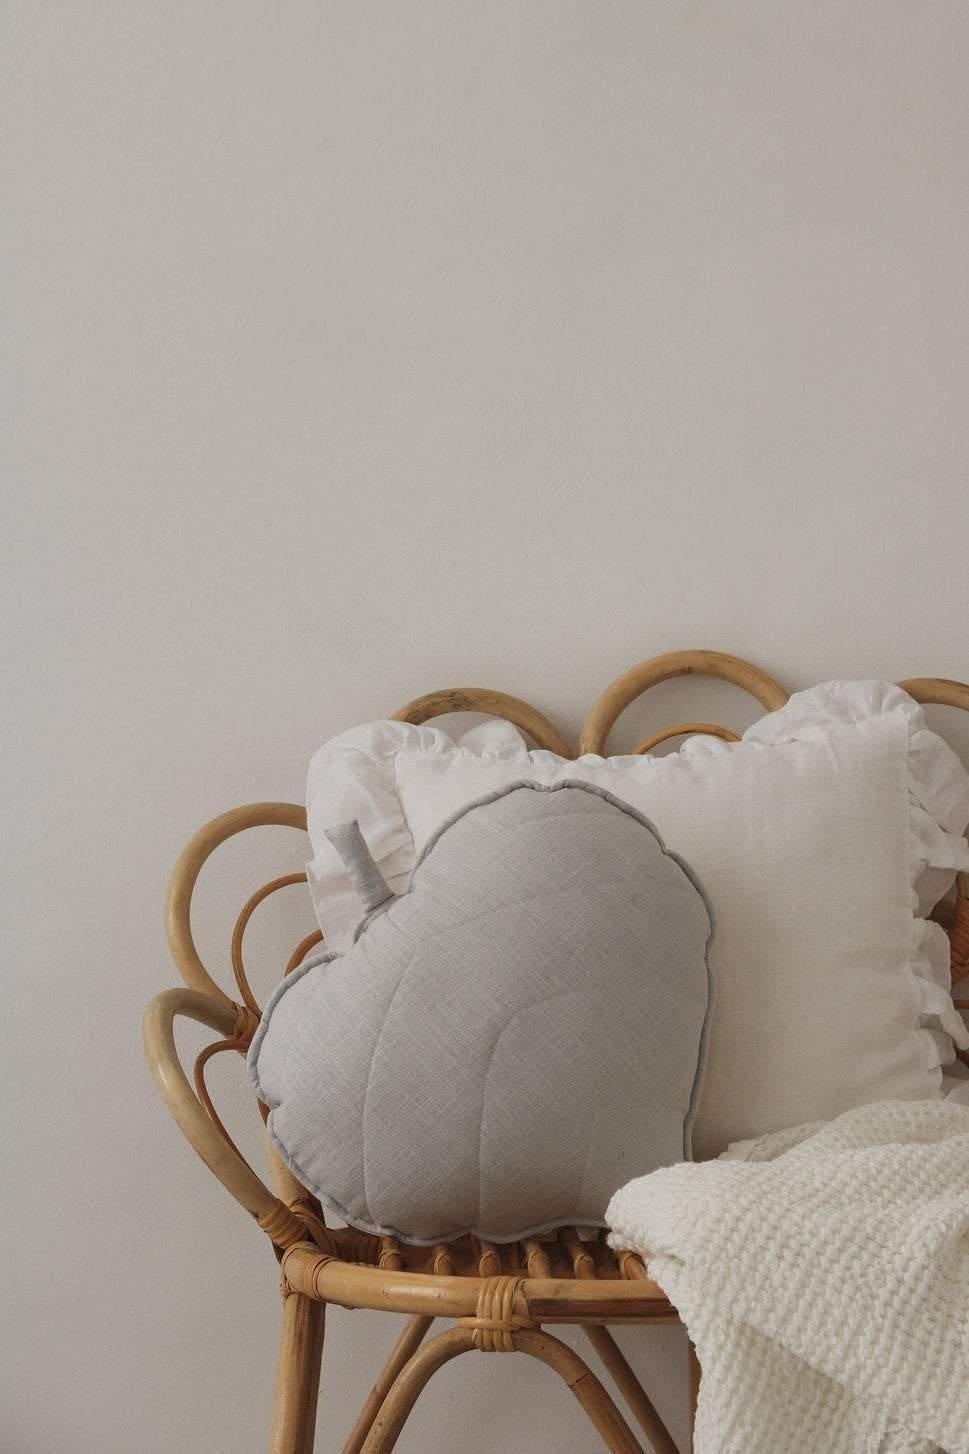 Leaf Pillow Linen “Pigeon Grey” | Kids Room & Nursery Decor - Sumiye Co